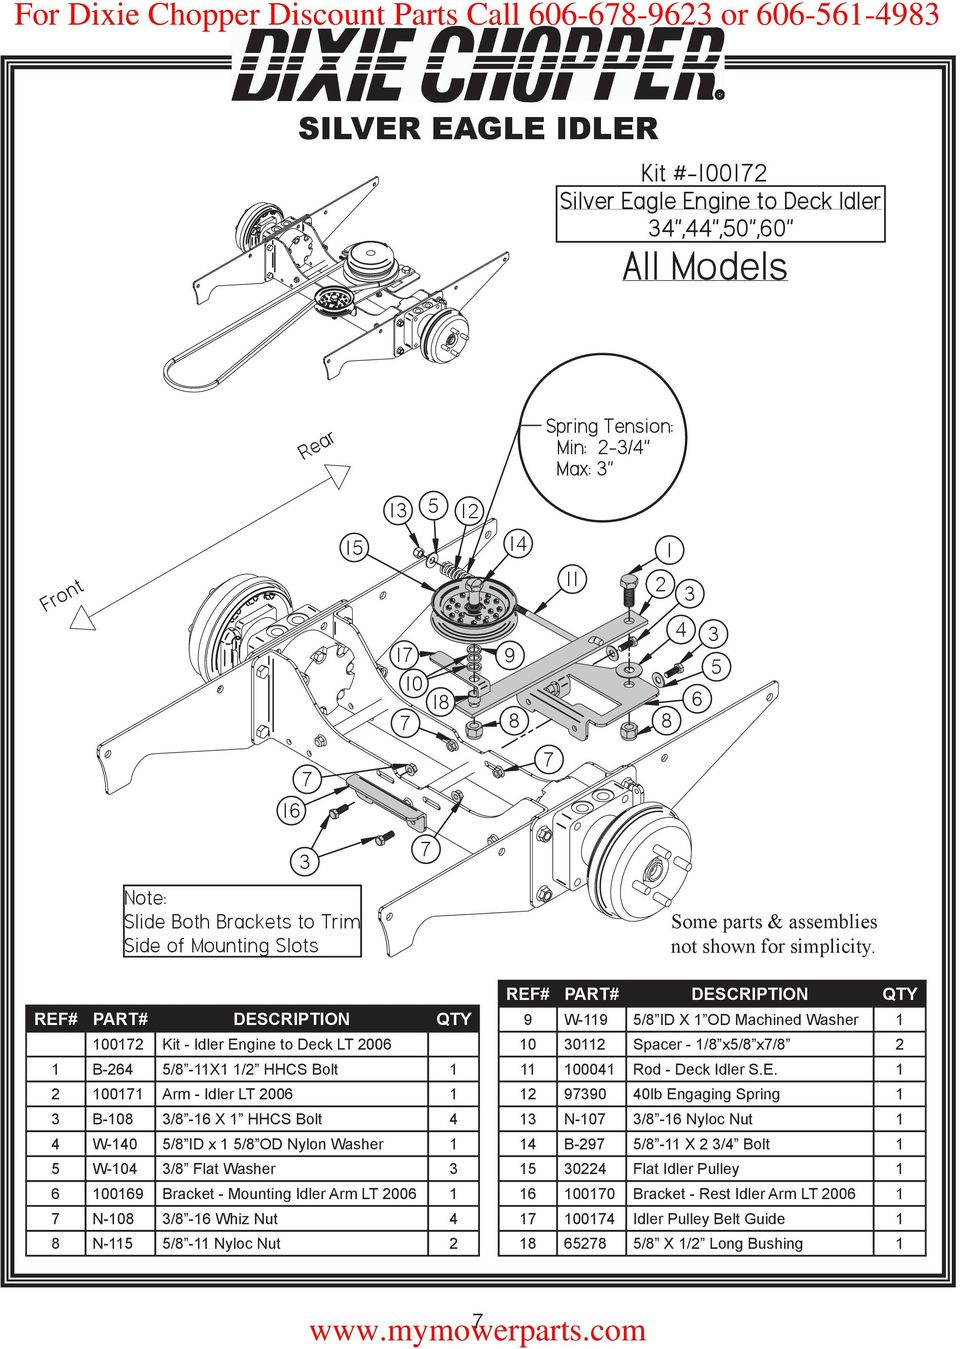 Dixie Chopper Belt Diagram The World S Fastest Lawn Mower Pdf